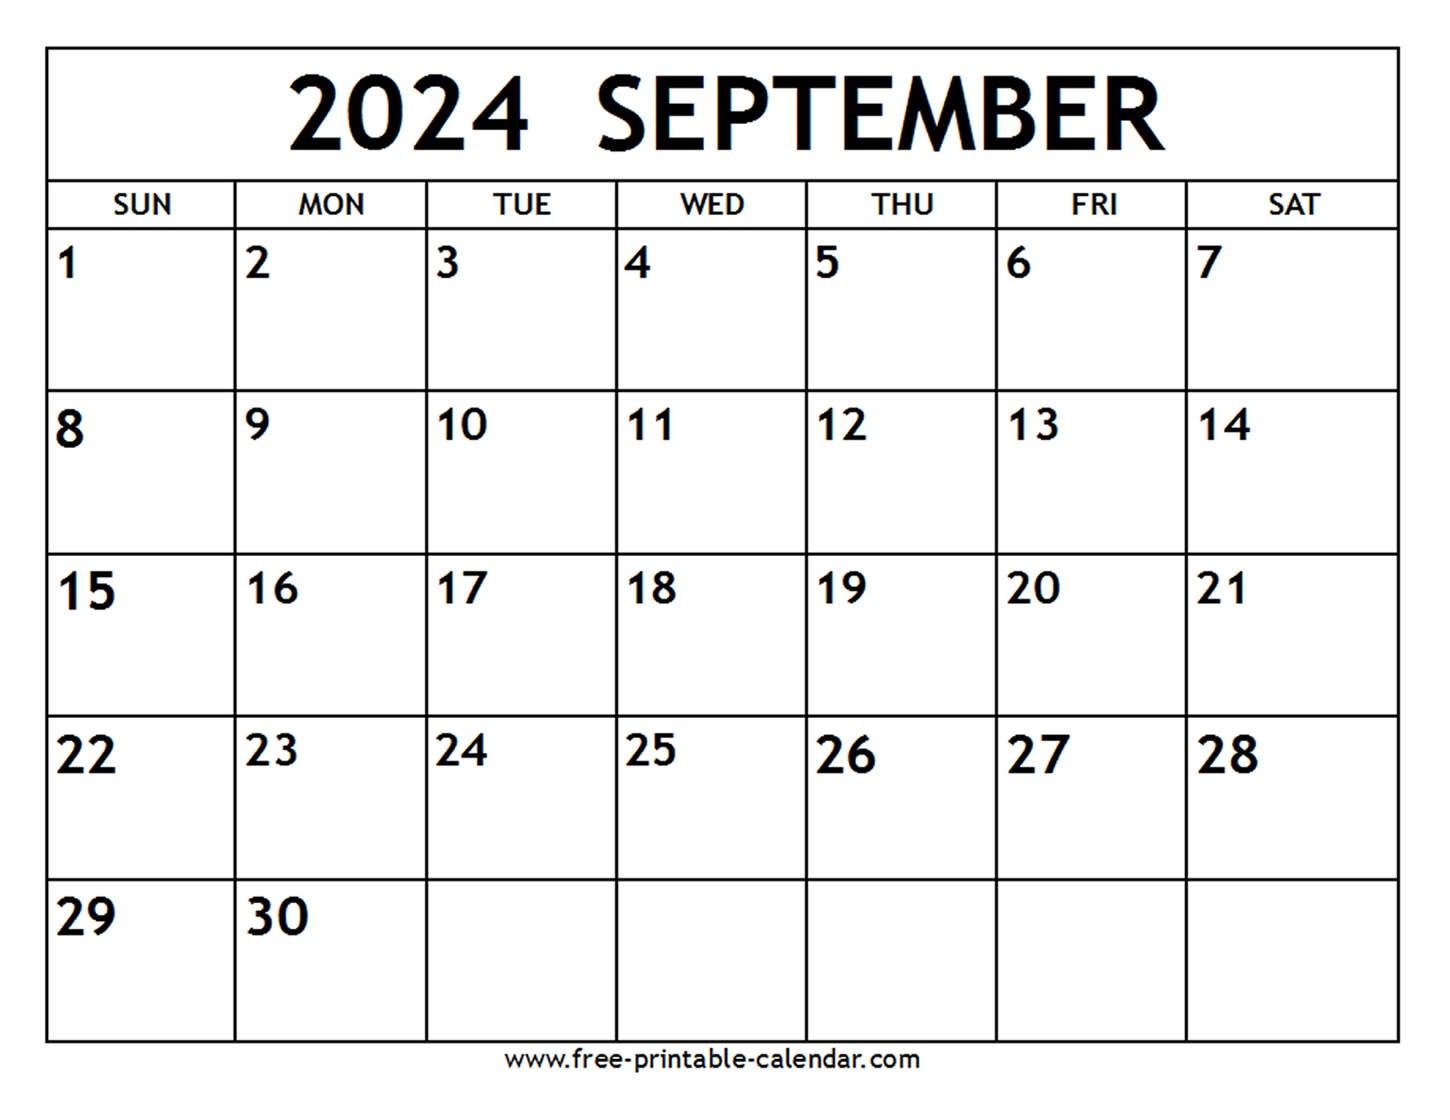 September 2024 Calendar - Free-Printable-Calendar in Free Printable Calendar August And September 2024